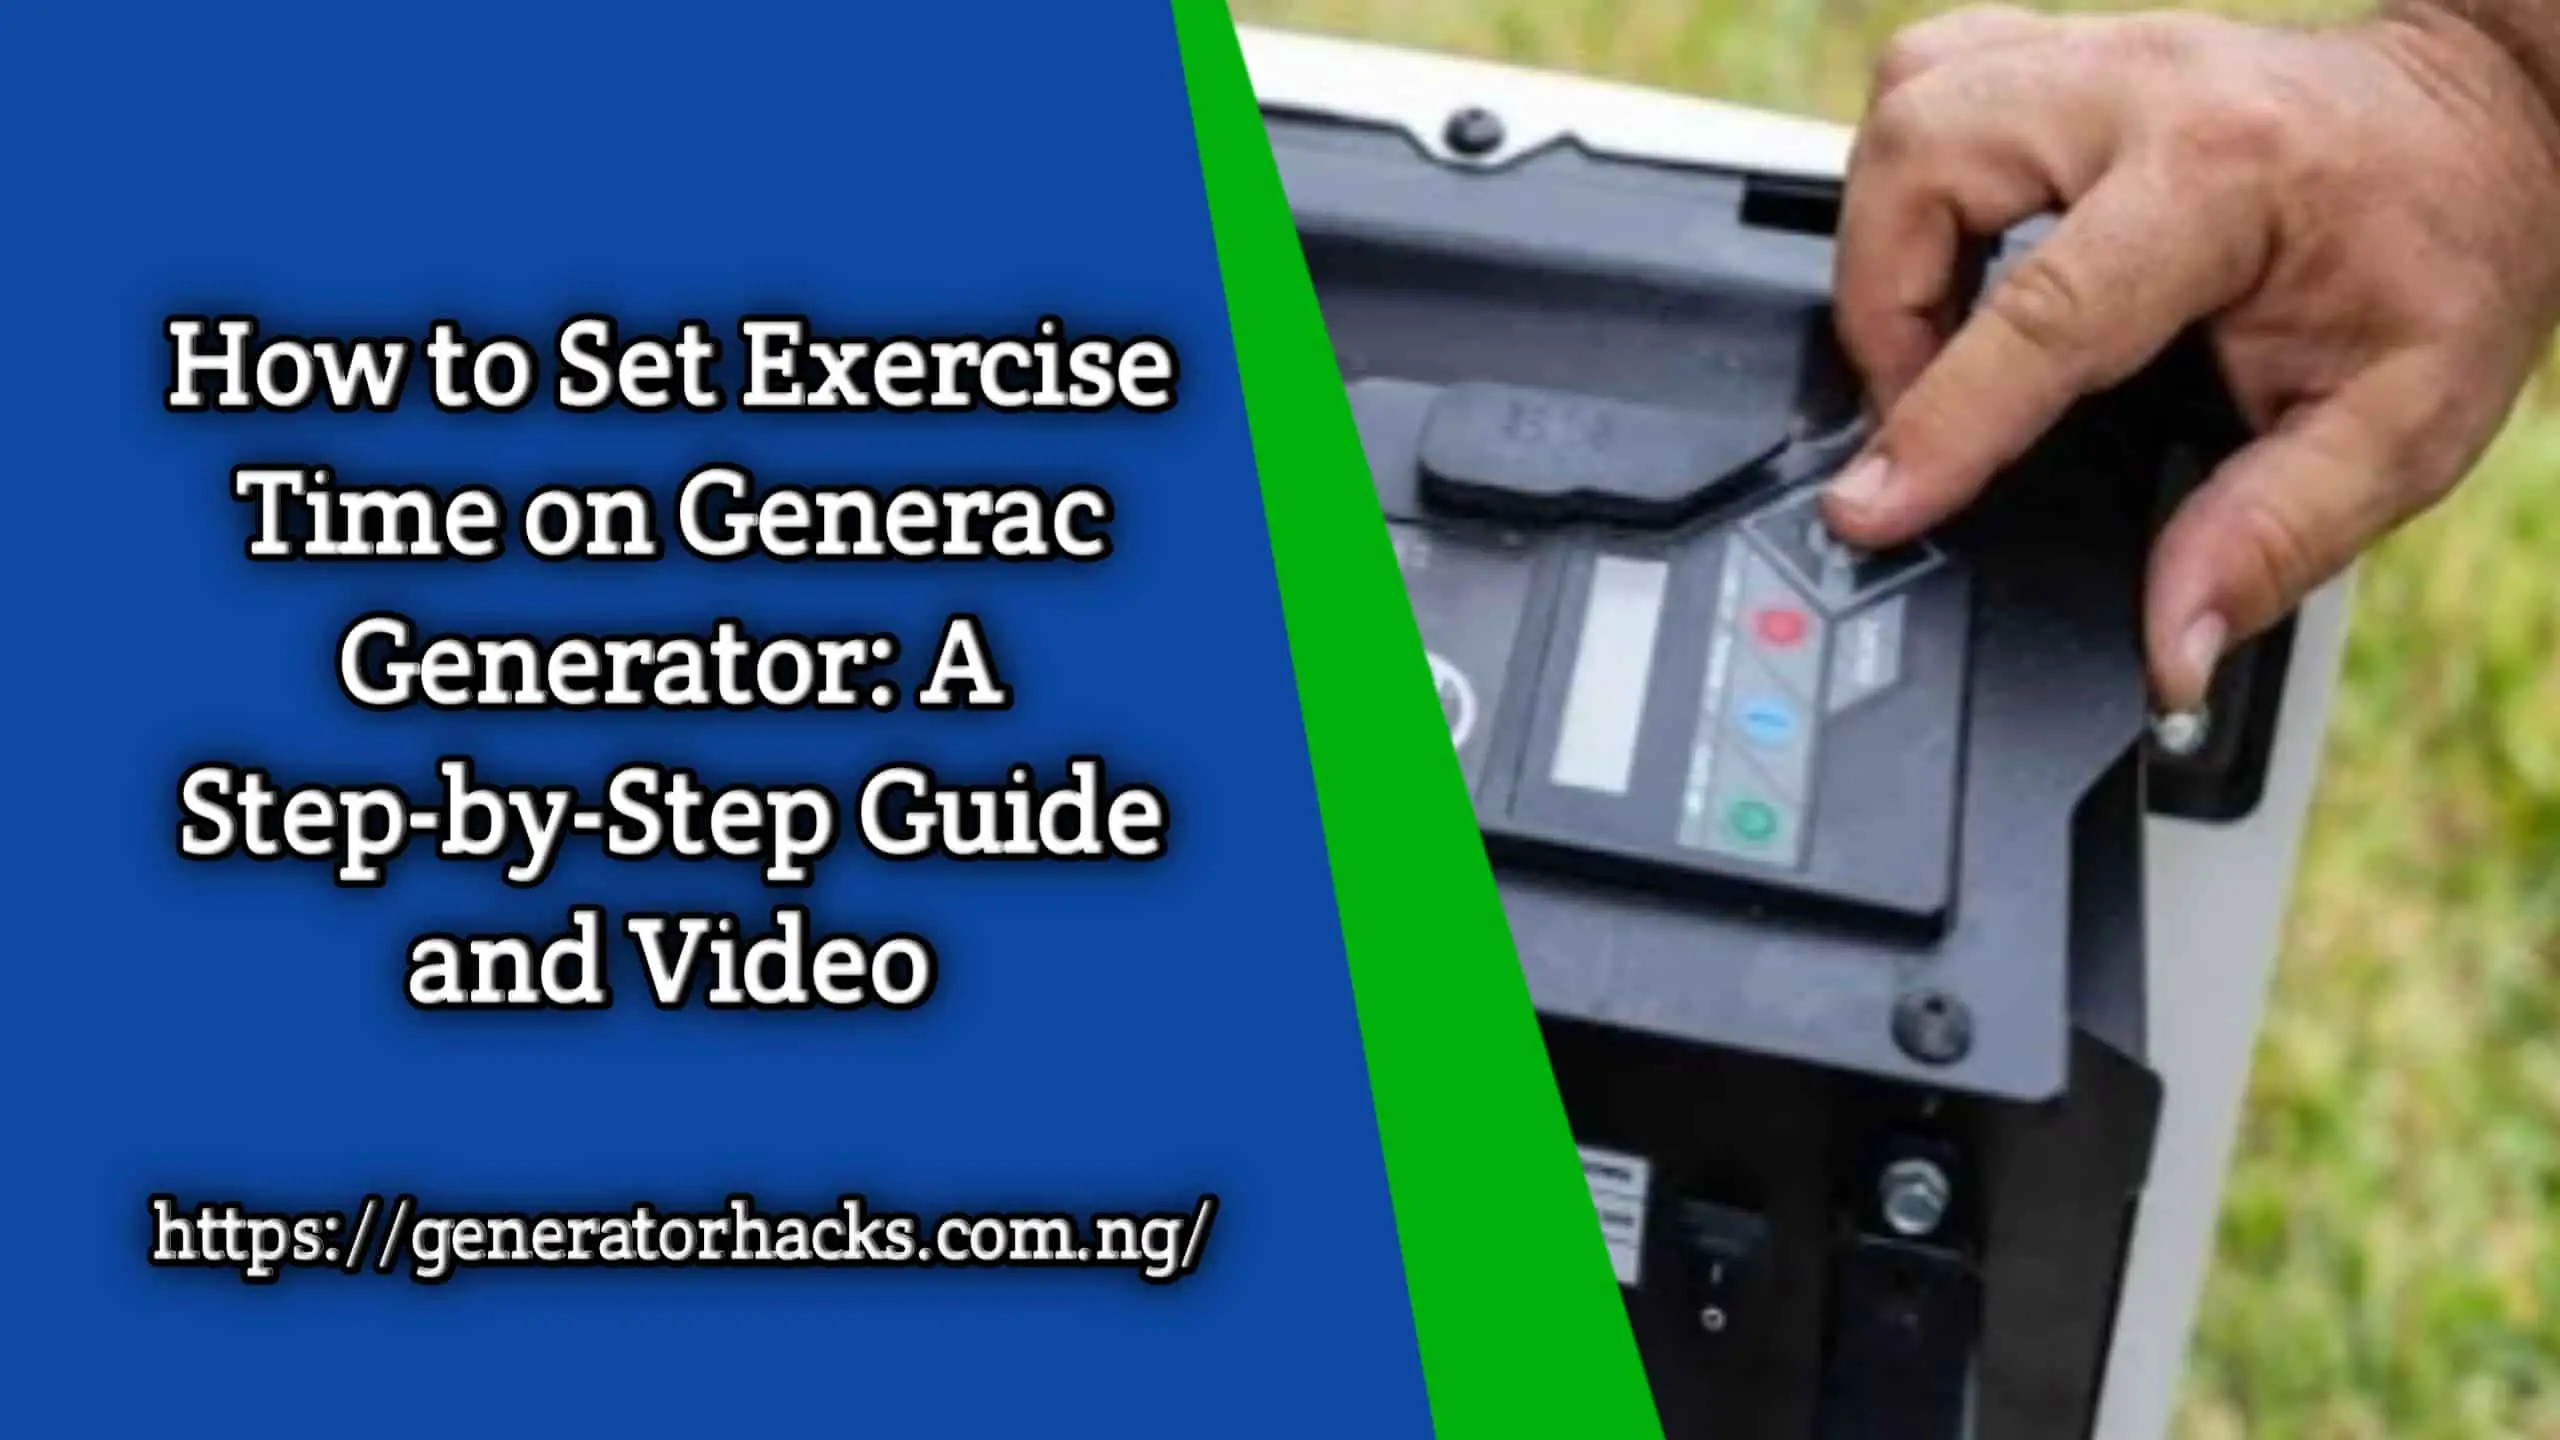 How to Reset Red Light on Generac Generator